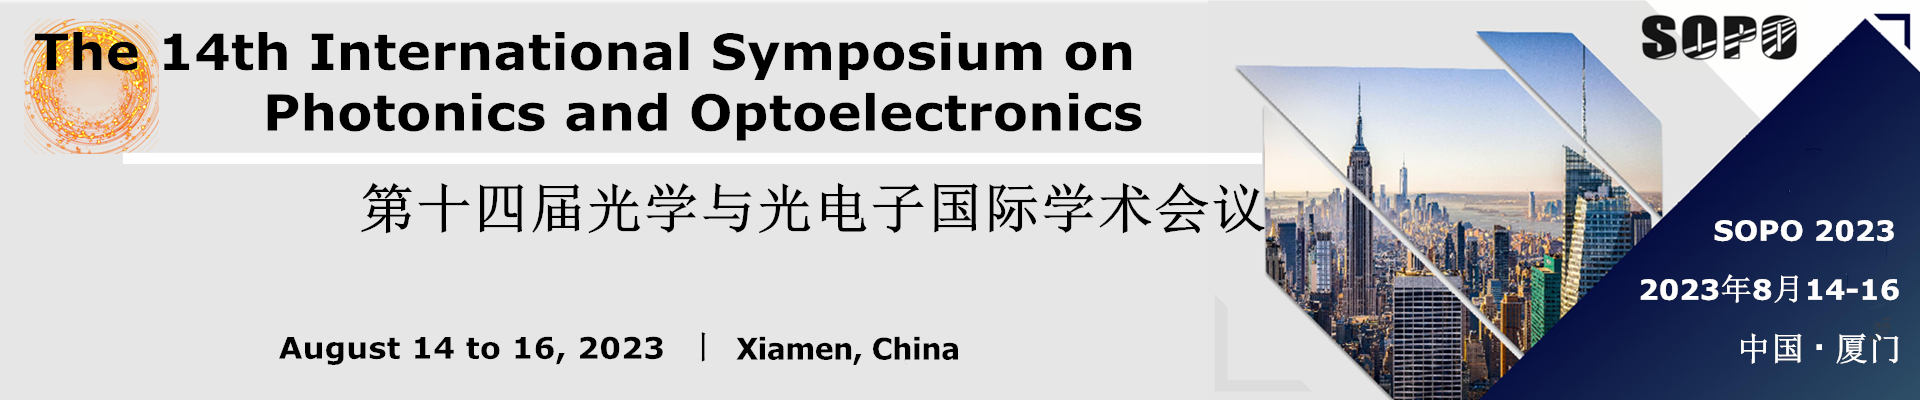 The 14th International Symposium on Photonics and Optoelectronics (SOPO 2023)